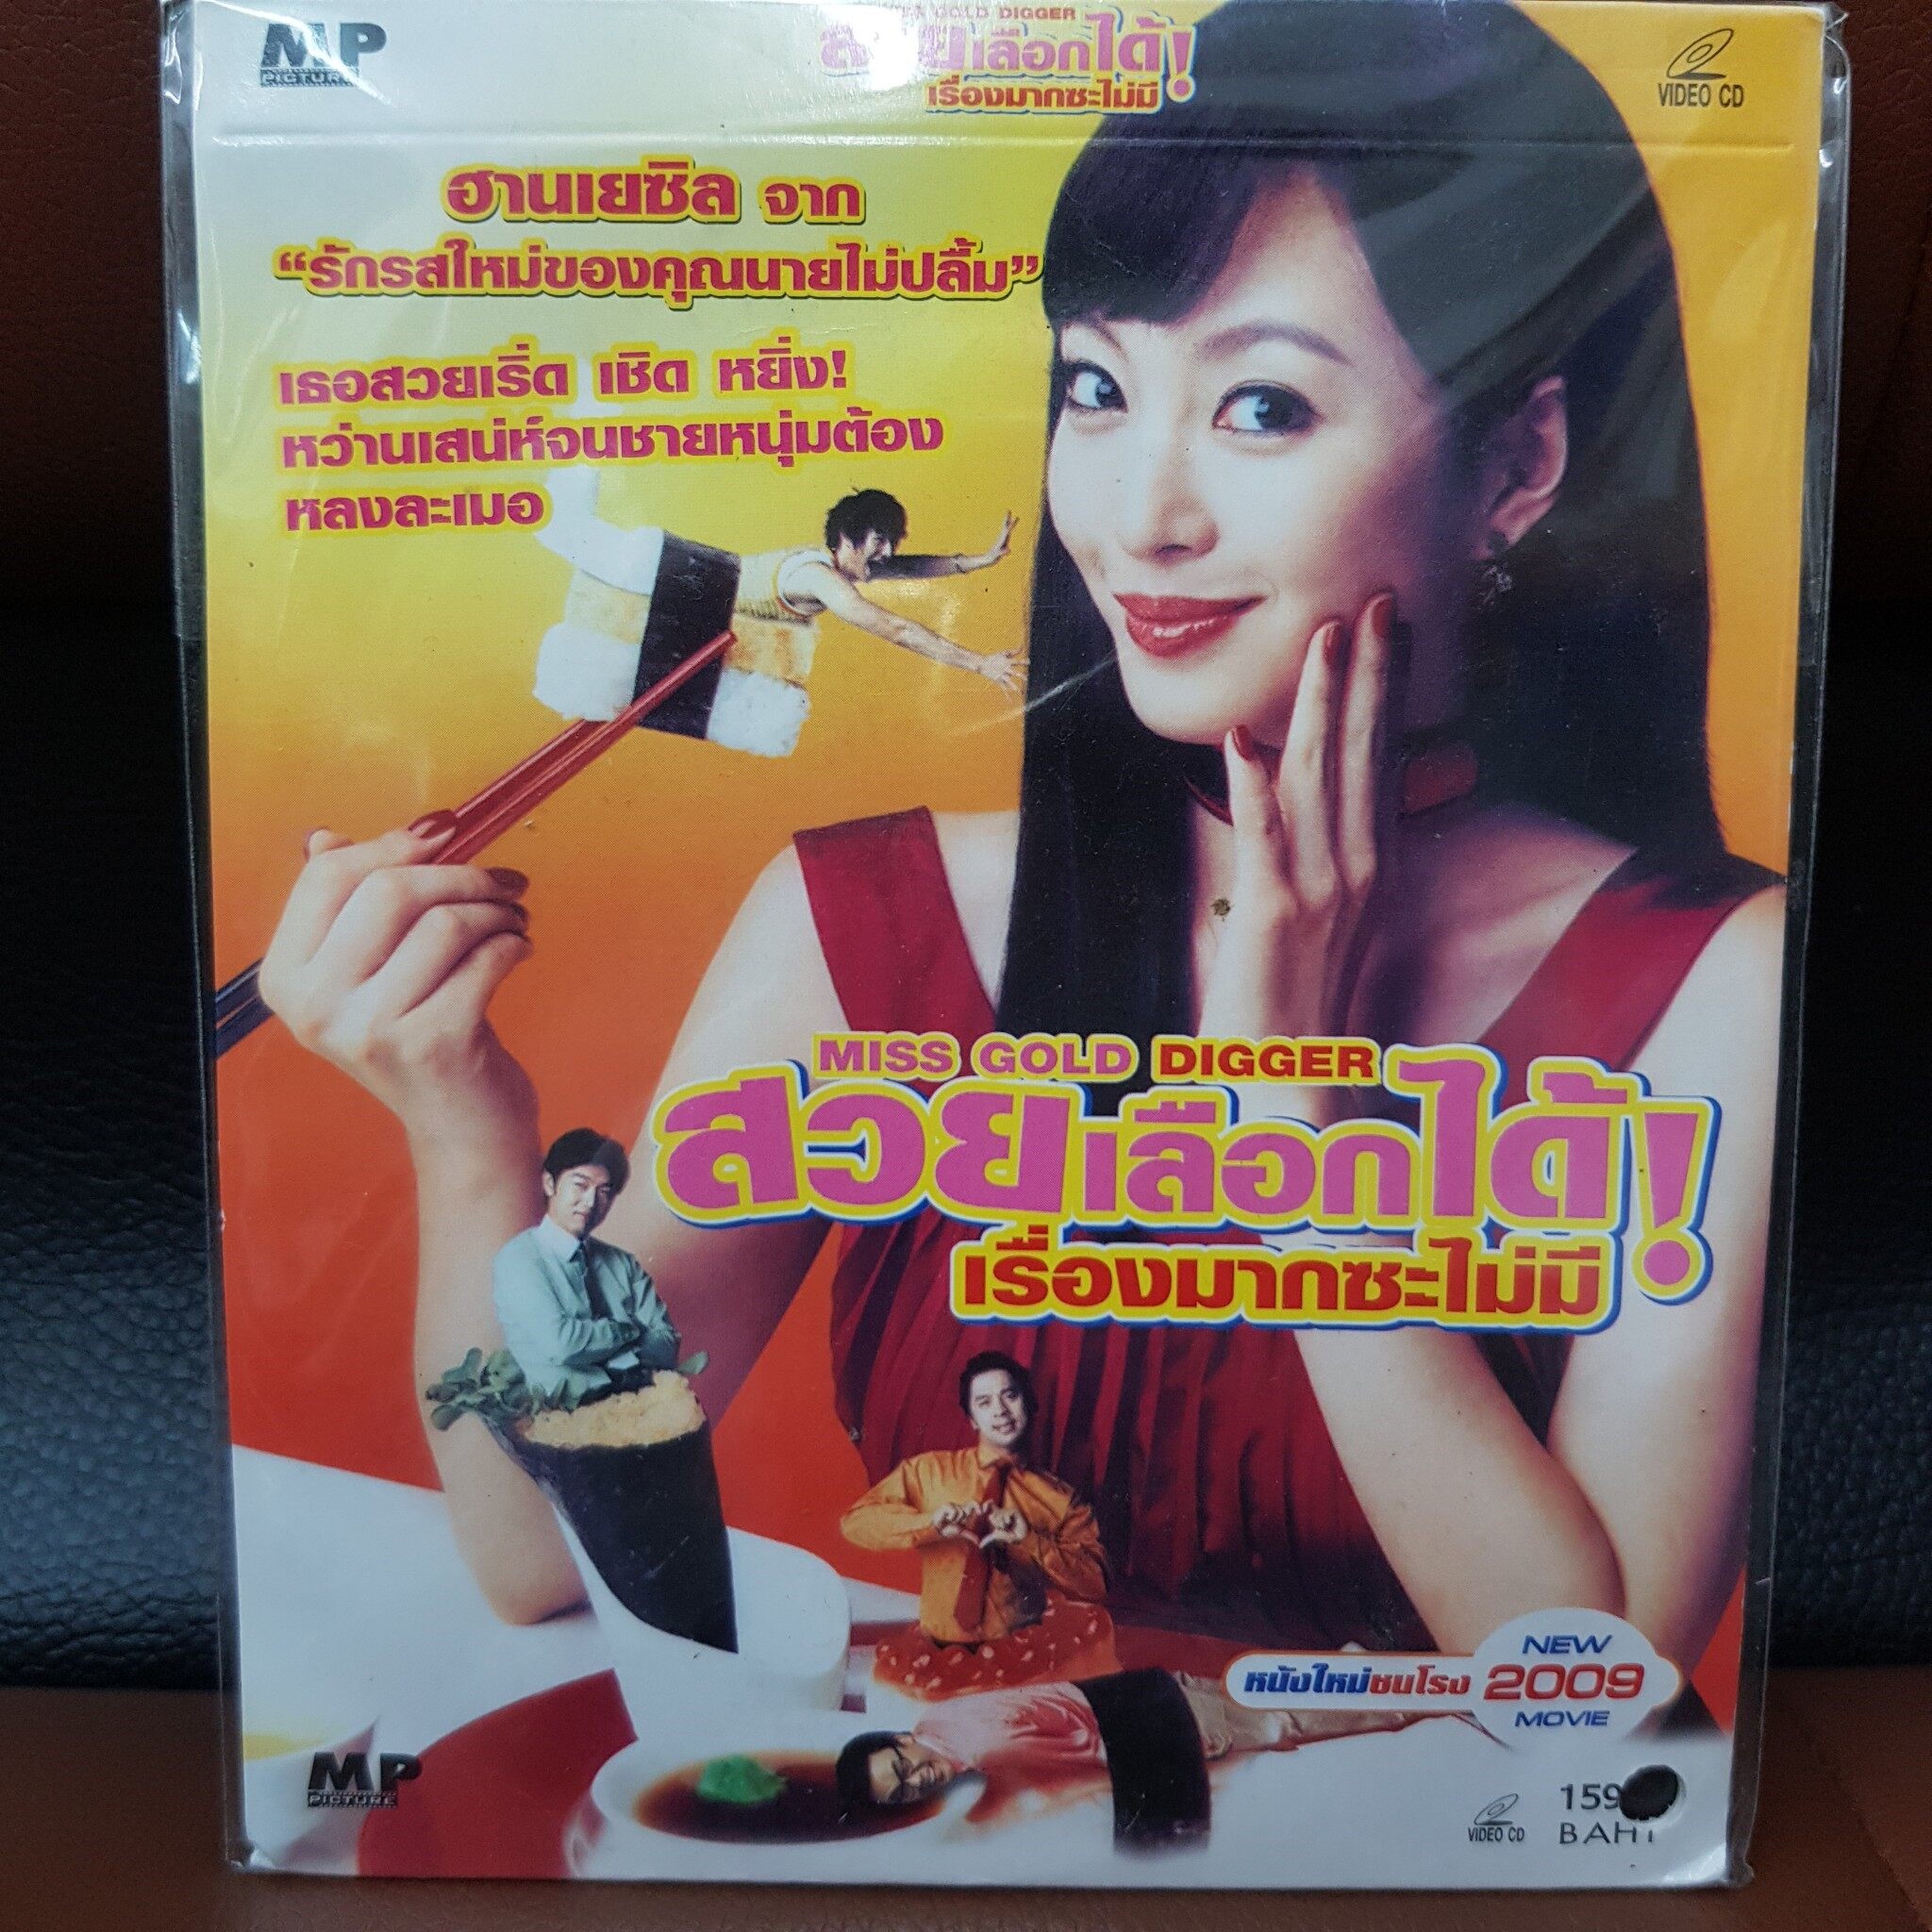 VCD สวยเลือกได้ เรื่องมากซะไม่มี miss gold digger พากย์ไทย (SBYVCD59-สวยเลือกได้เรื่องมากซะไม่มี) FUNNY MOVIE  หนังตลก เบาสมอง หนังเก่า หายาก วีซีดี ลดราคา ดูหนัง ลิขสิทธิื มาสเตอร์แท้ ภาพยนตร์ cinema theater STARMART